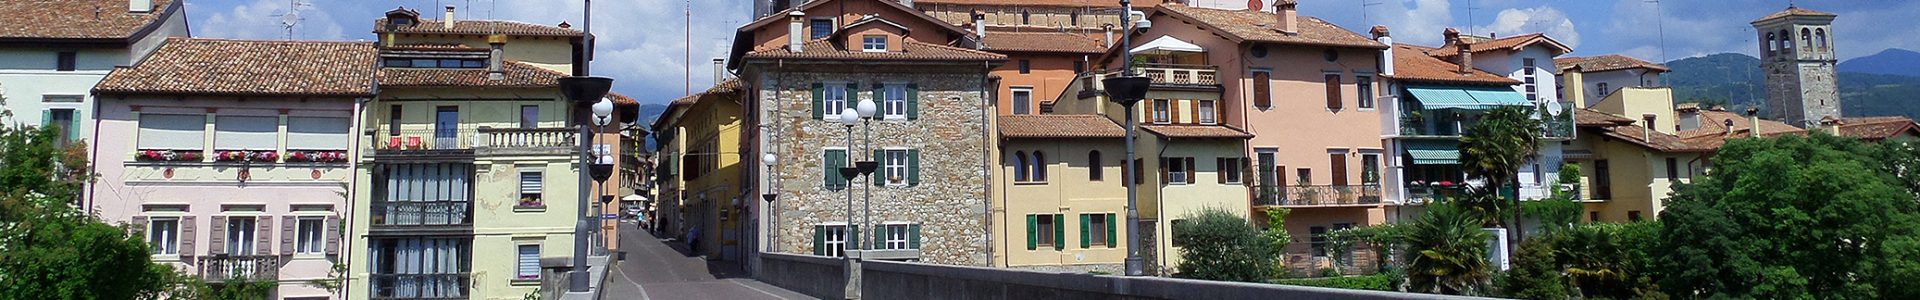 UNESCO heritage town of Cividale del Friuli